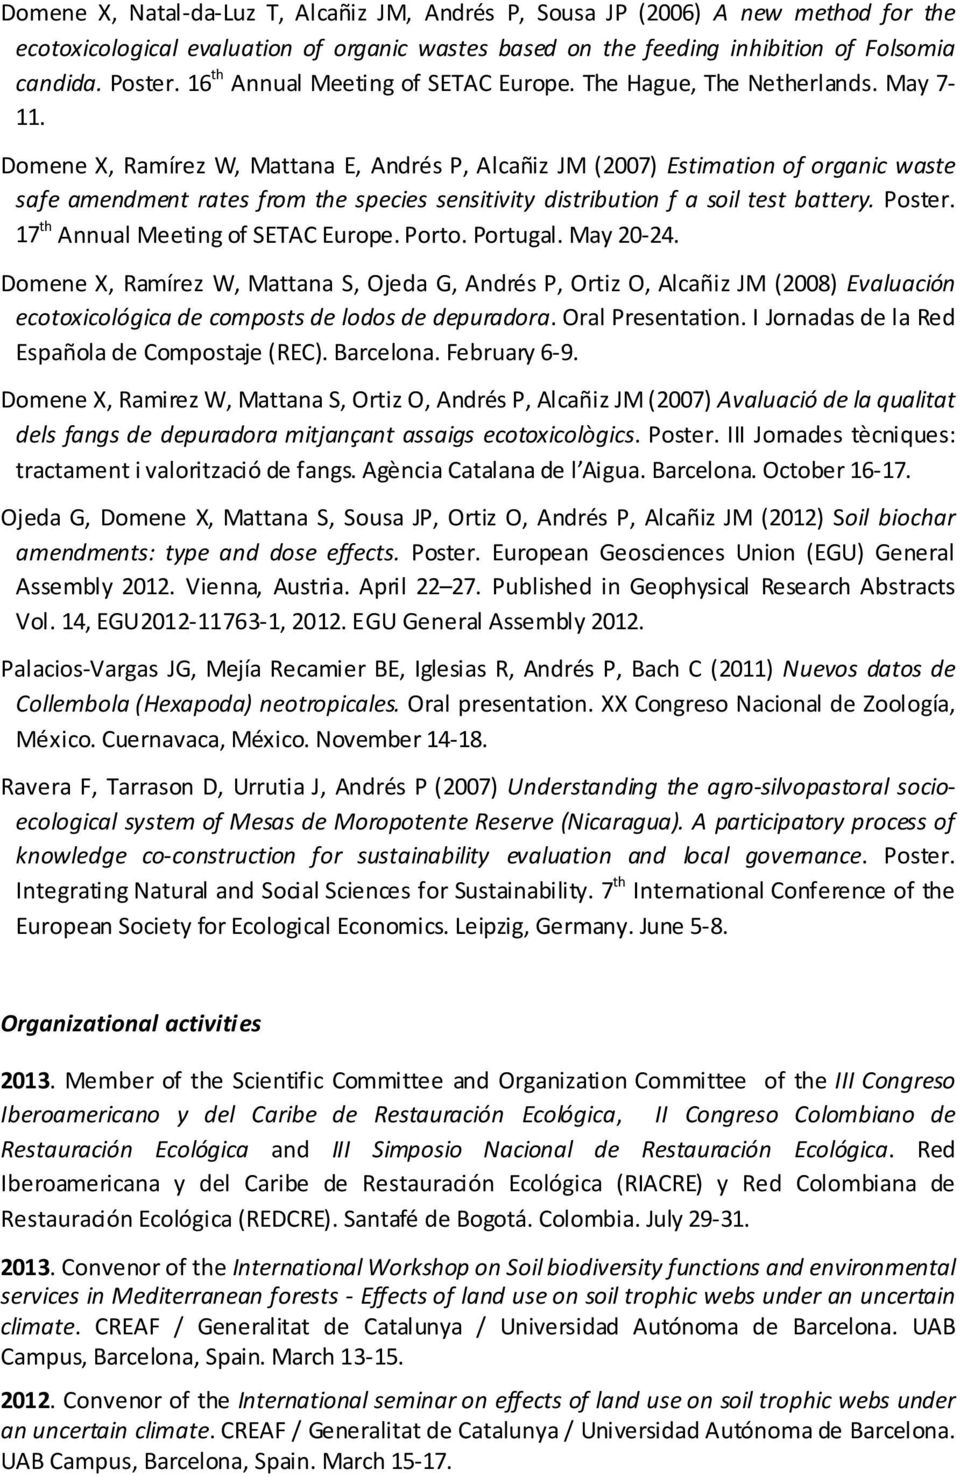 Domene X, Ramírez W, Mattana E, Andrés P, Alcañiz JM (2007) Estimation of organic waste safe amendment rates from the species sensitivity distribution f a soil test battery. Poster.